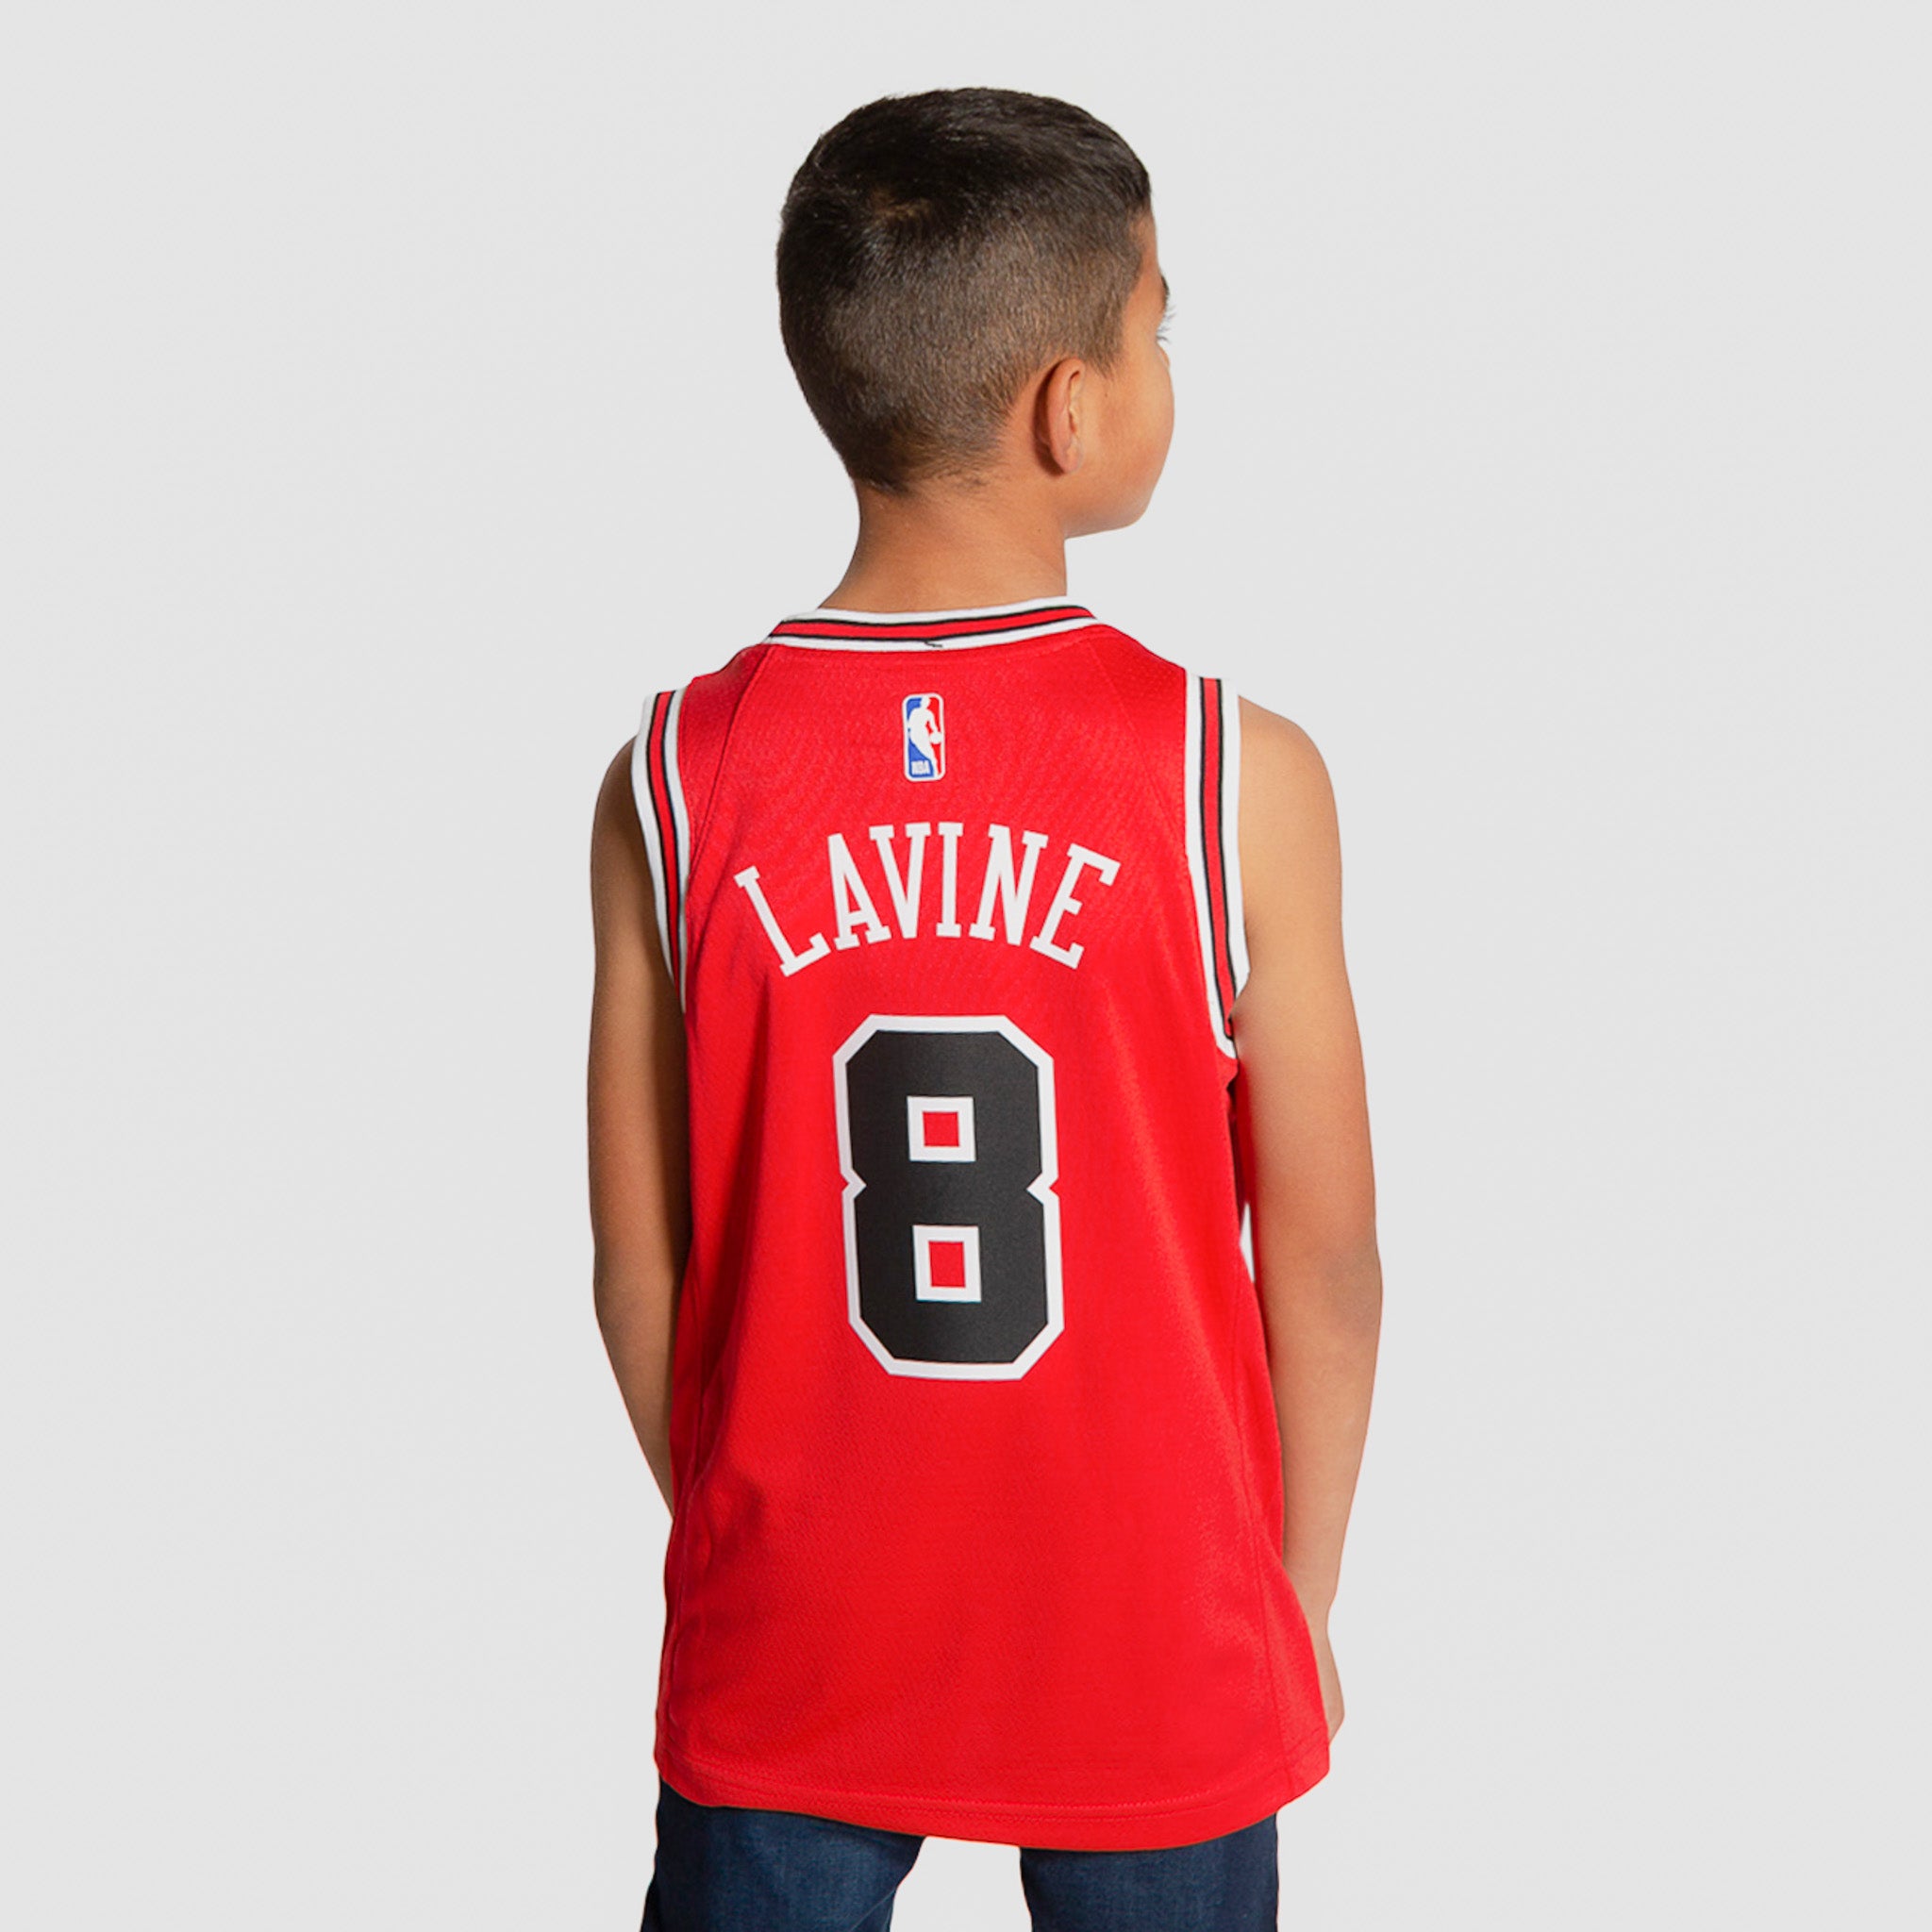 Authentic Nike NBA Chicago Bulls Zach LaVine City Edition Basketball Jersey